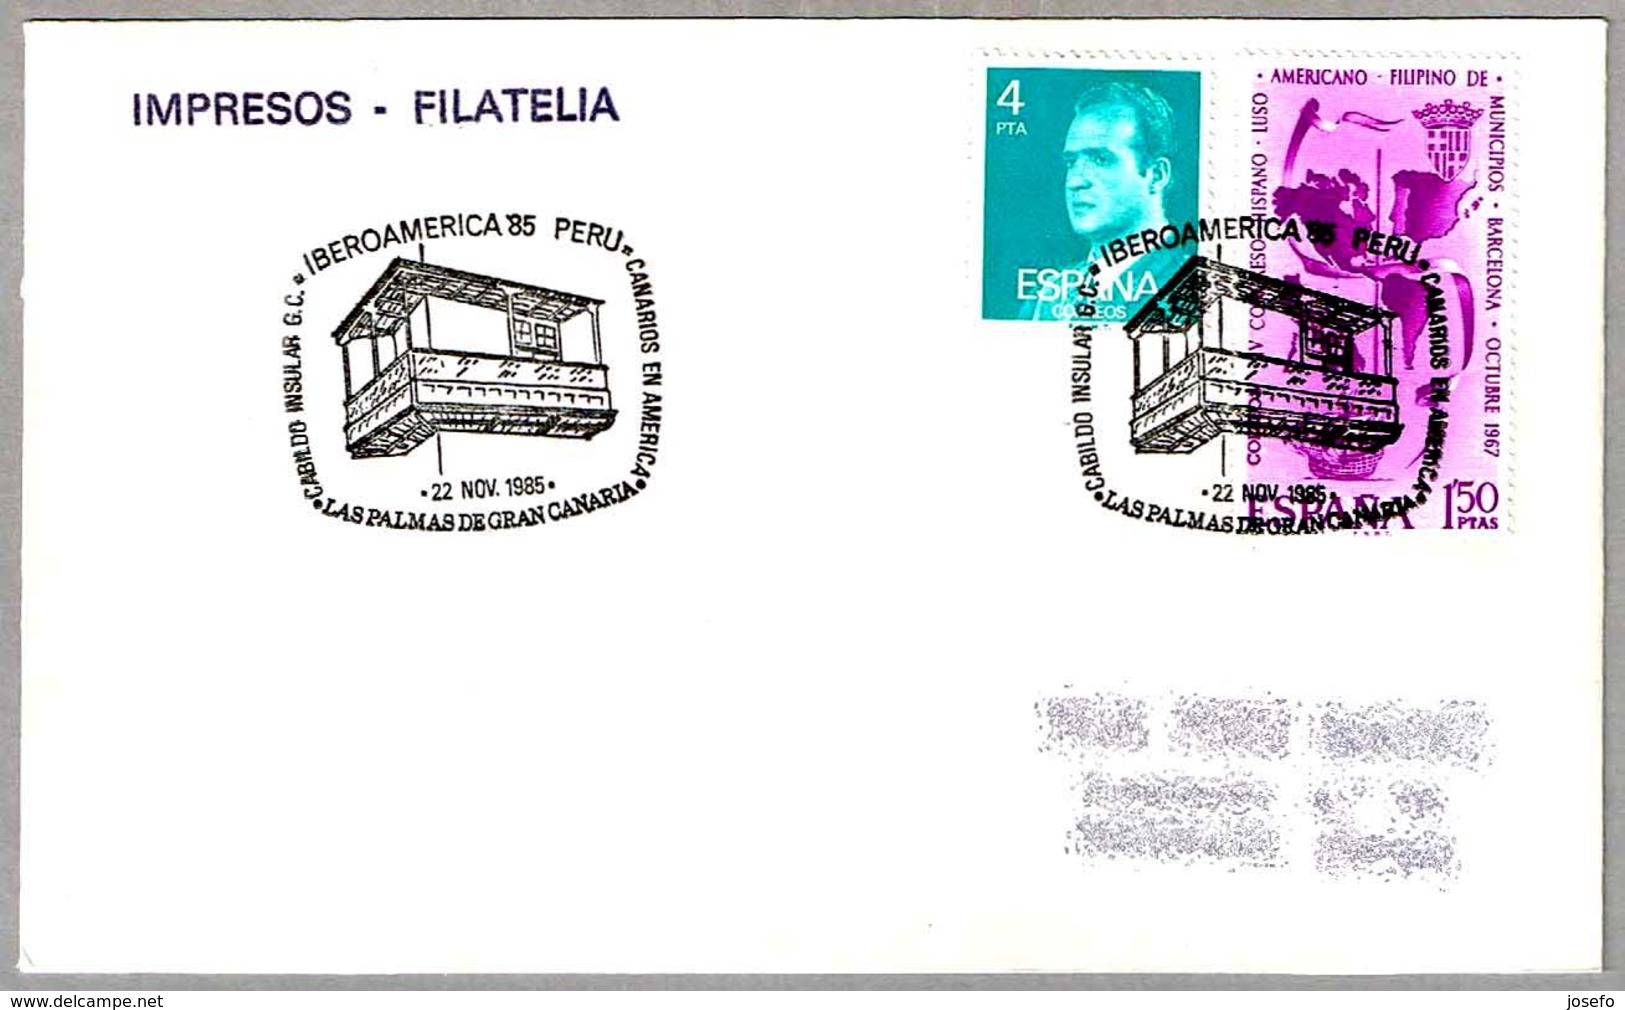 Matasellos IBEROAMERICA'85 PERU - CANARIOS EN AMERICA. Las Palmas G.C., Canarias, 1985 - Covers & Documents